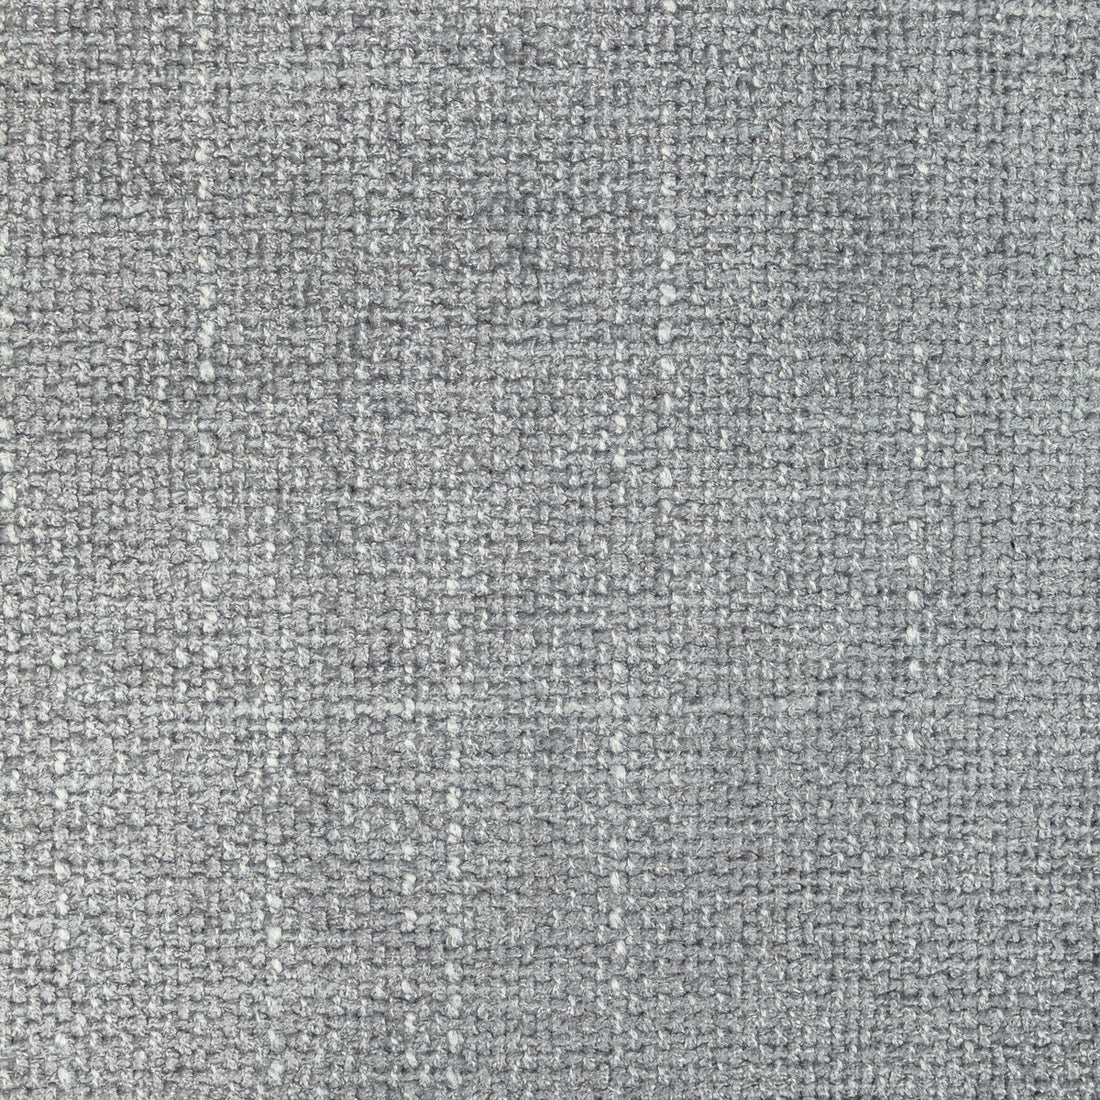 Kravet Smart fabric in 36579-11 color - pattern 36579.11.0 - by Kravet Smart in the Performance Kravetarmor collection